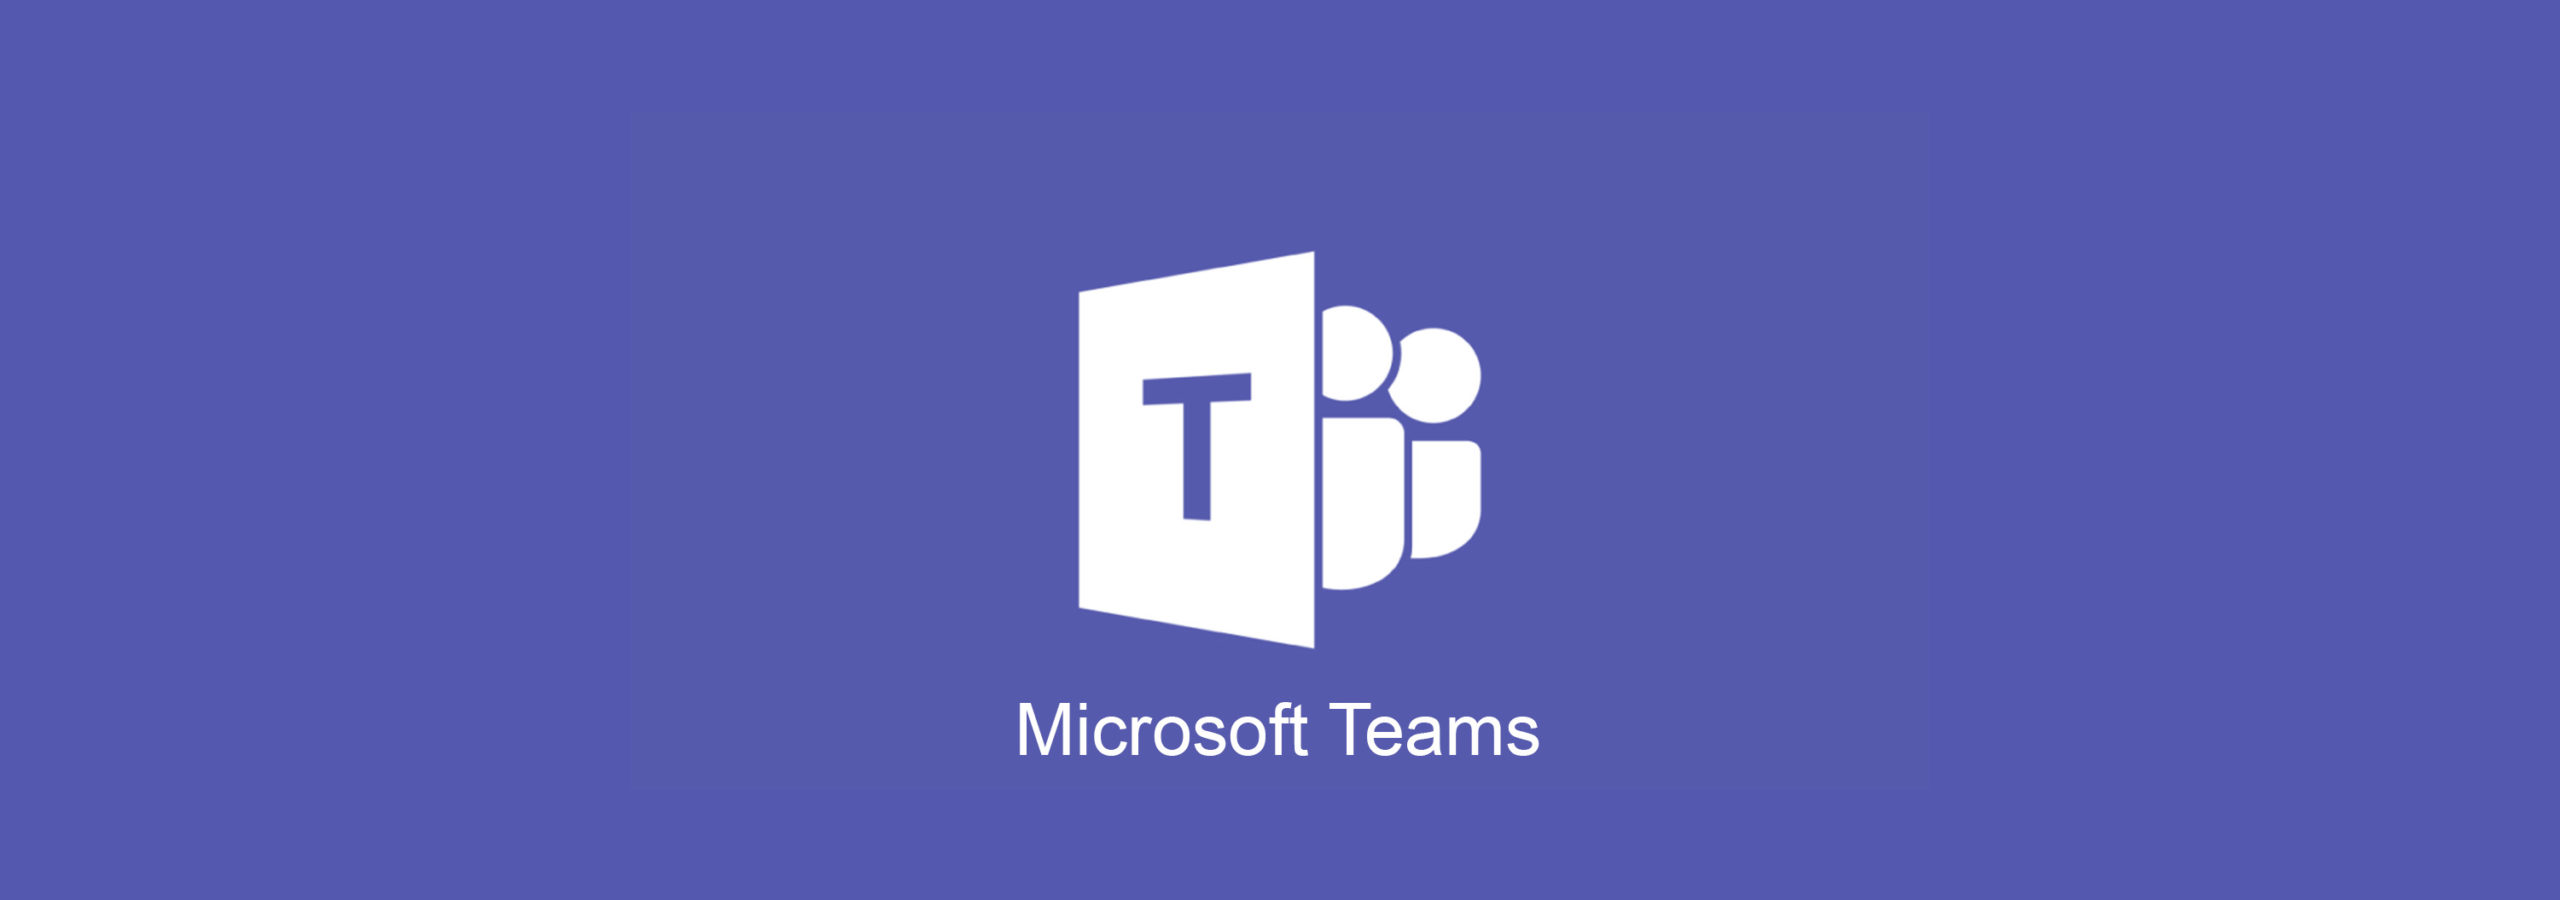 Teams replies. Microsoft Teams. Team логотип. Microsoft Teams логотип. Значок Майкрософт Тимс.